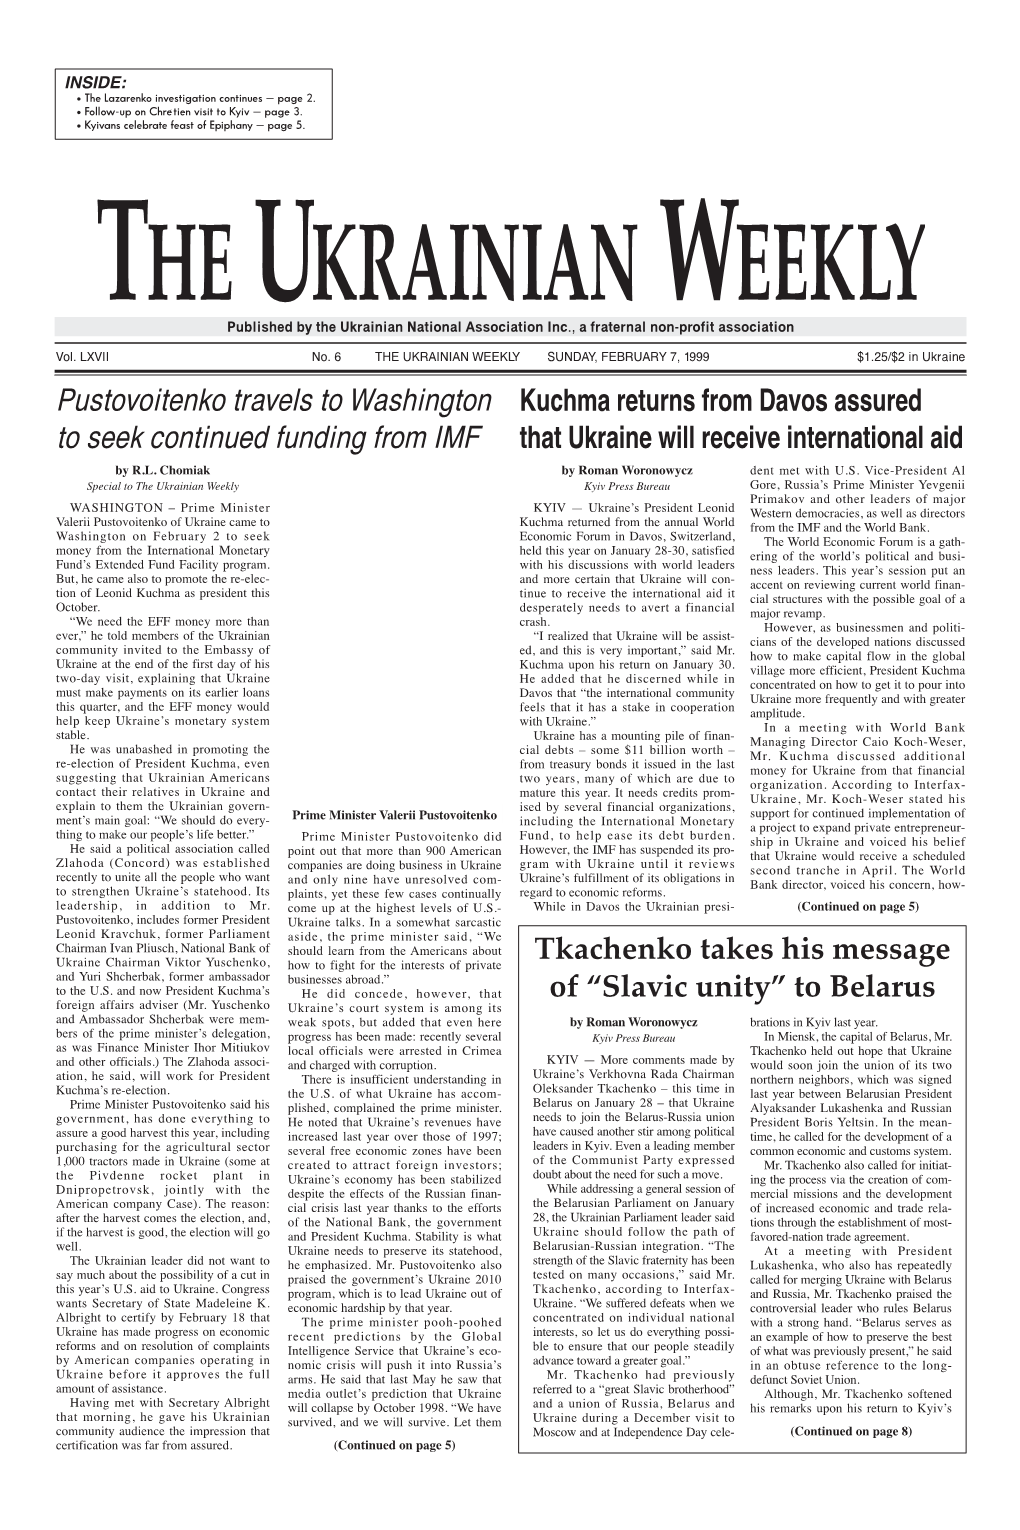 The Ukrainian Weekly 1999, No.6